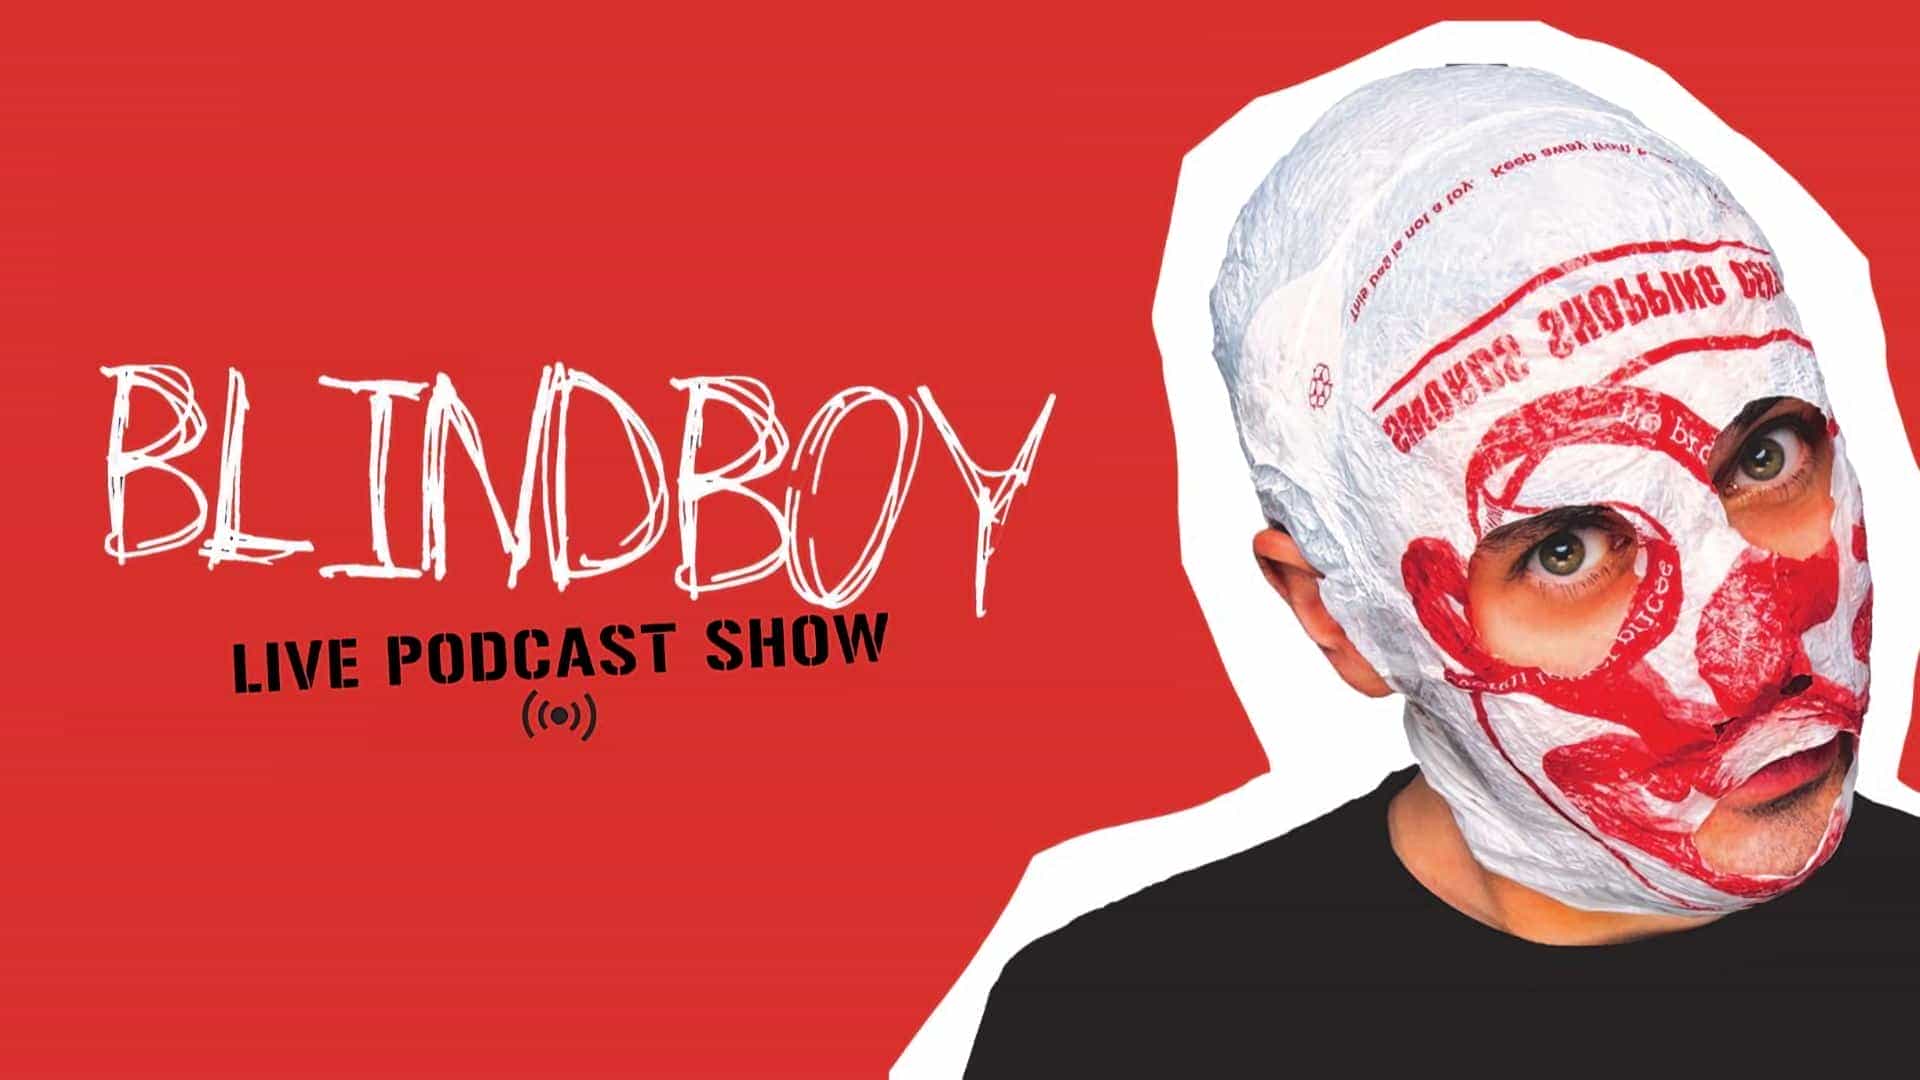 The Blindboy Podcast Live